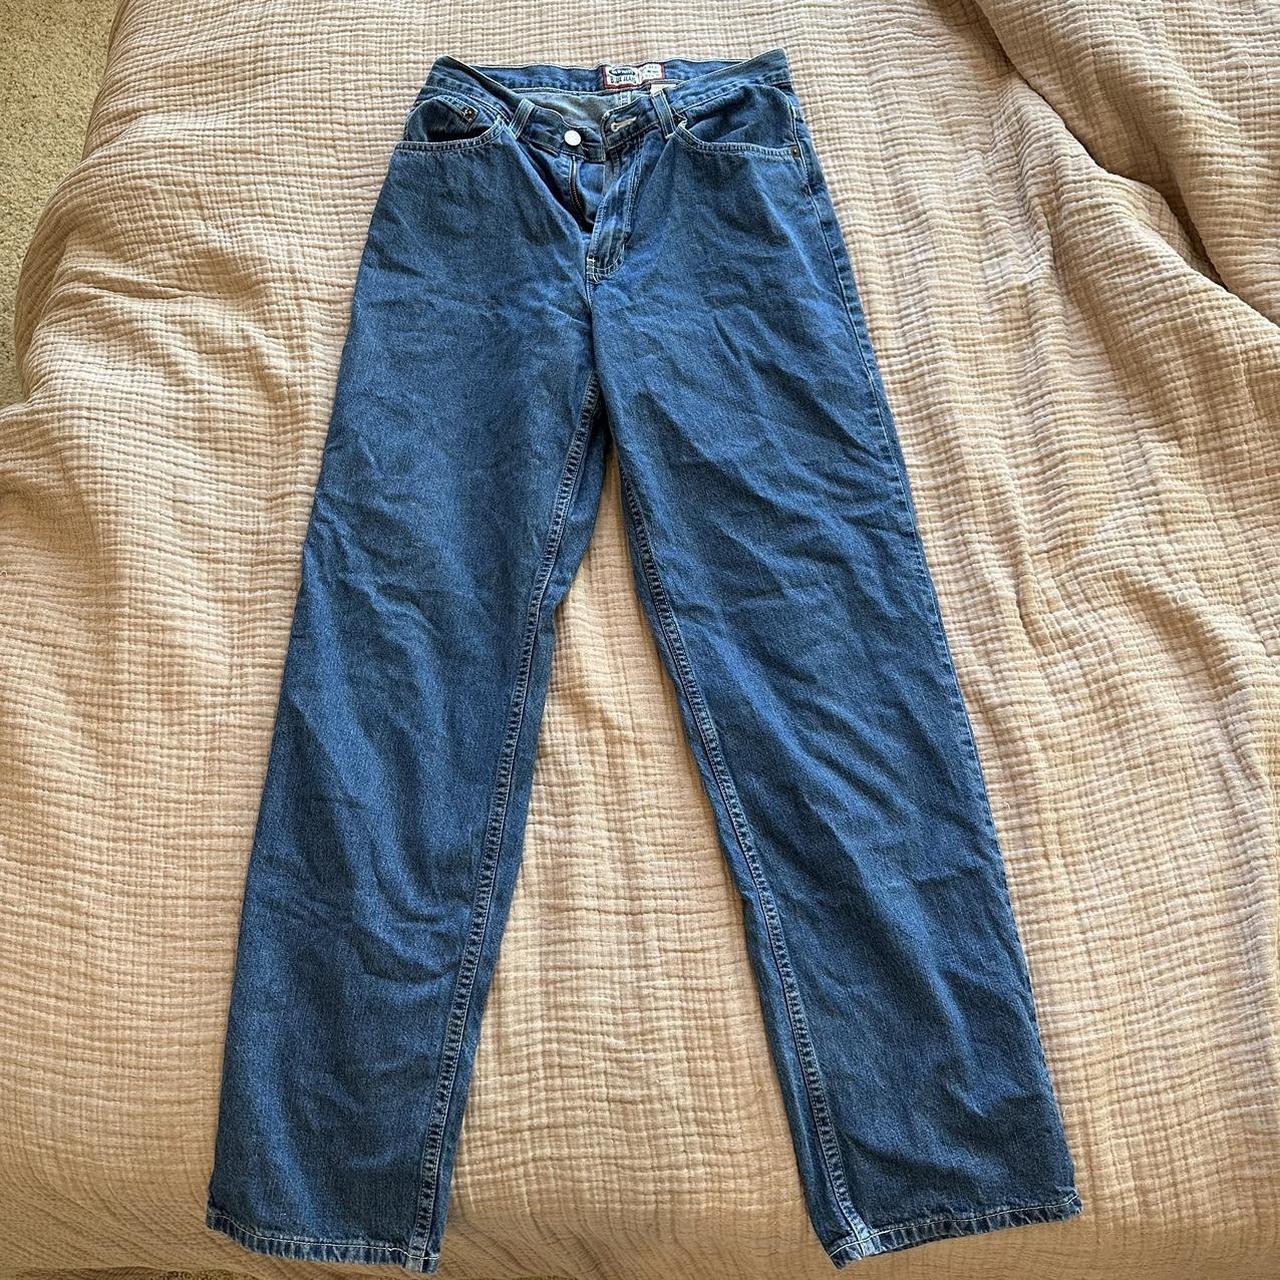 Vintage Old Navy jeans. Size 8 long.